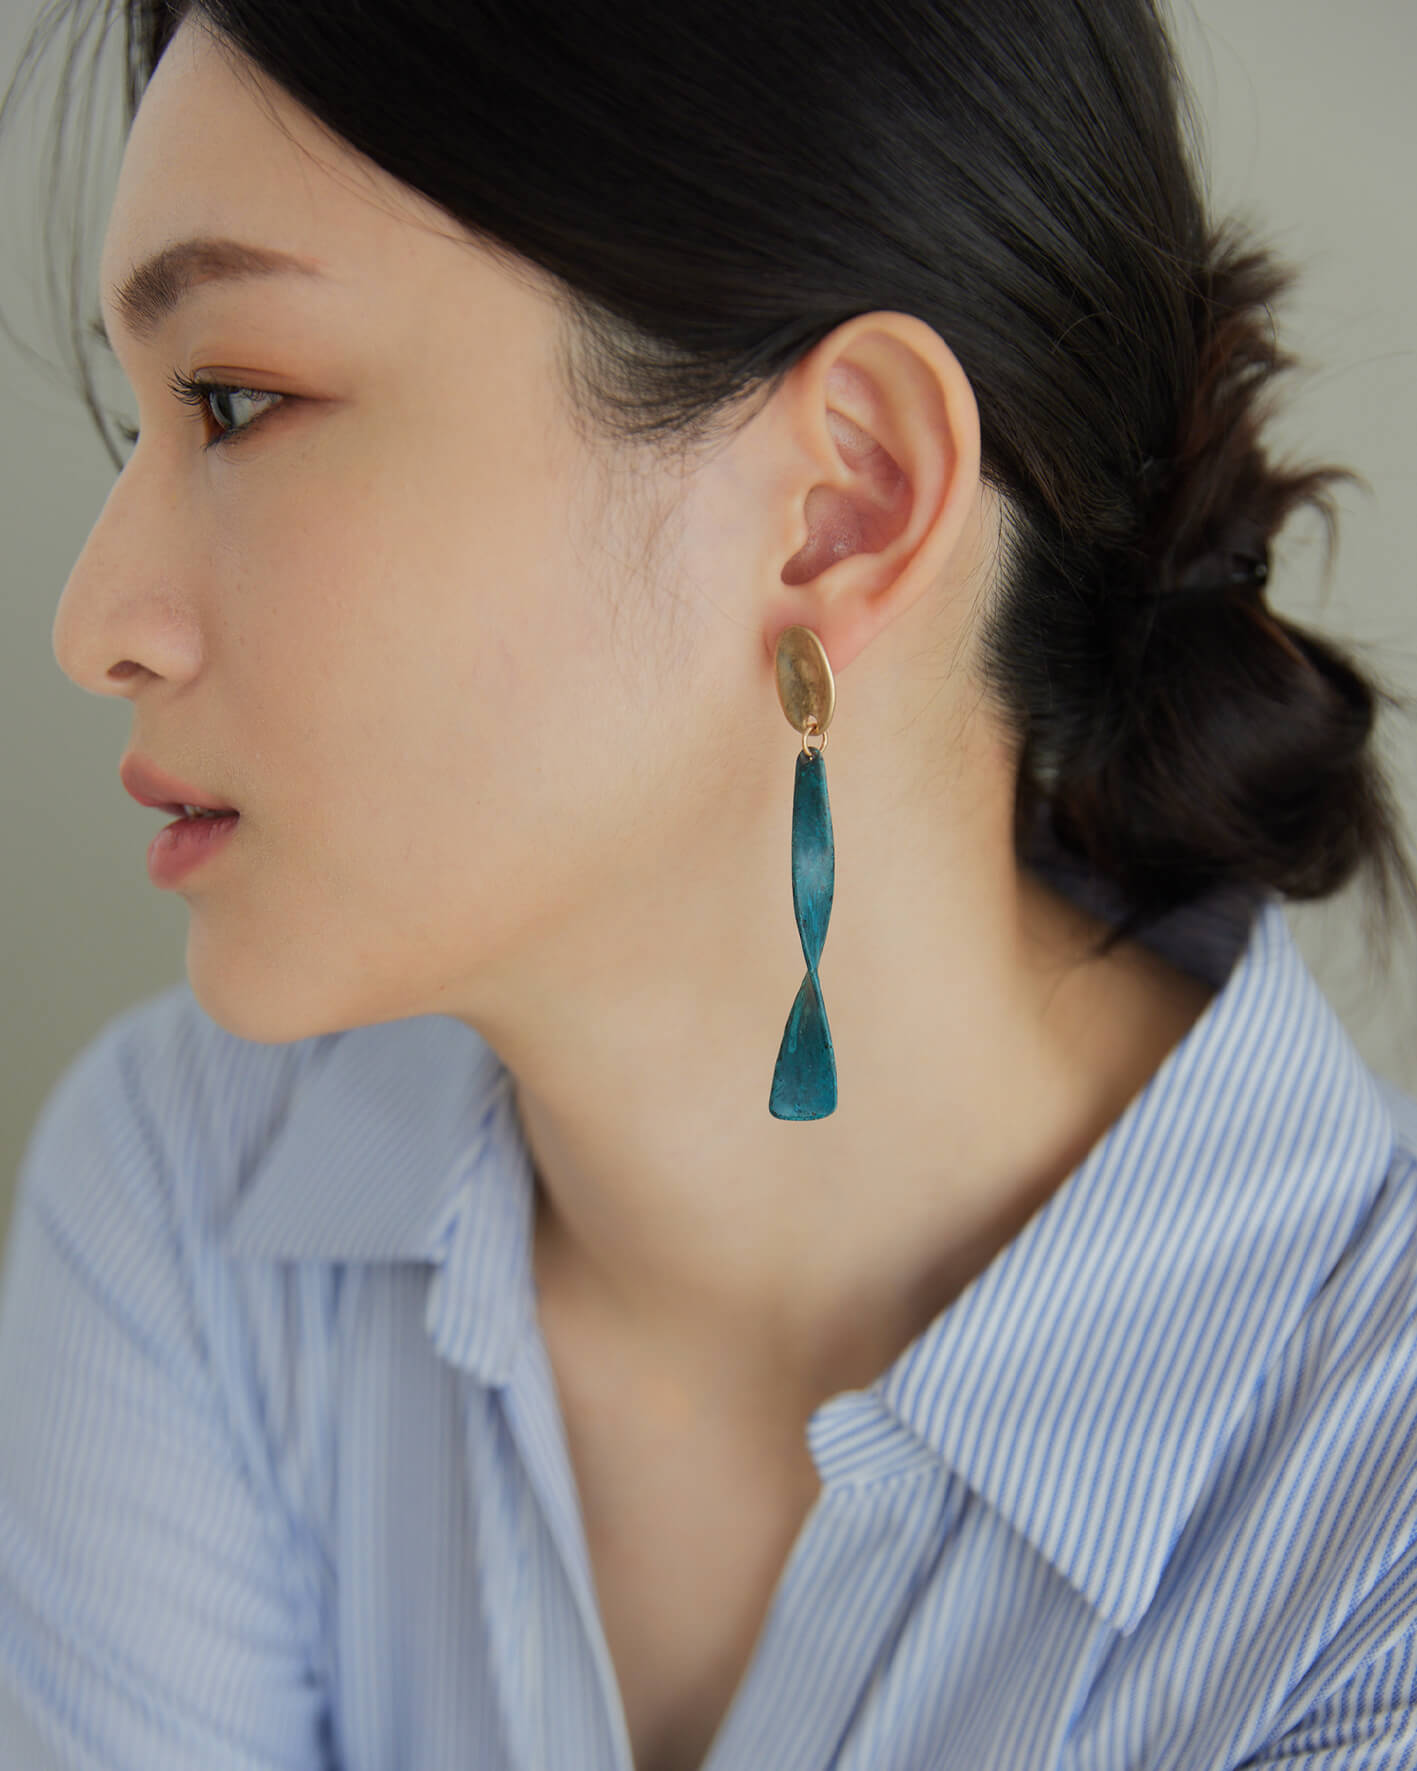 Eco安珂,韓國飾品,韓國耳環,韓國耳骨夾,垂墜耳環,螺旋夾耳環,可調式耳夾耳環,螺旋夾垂墜耳環,藍綠色耳環